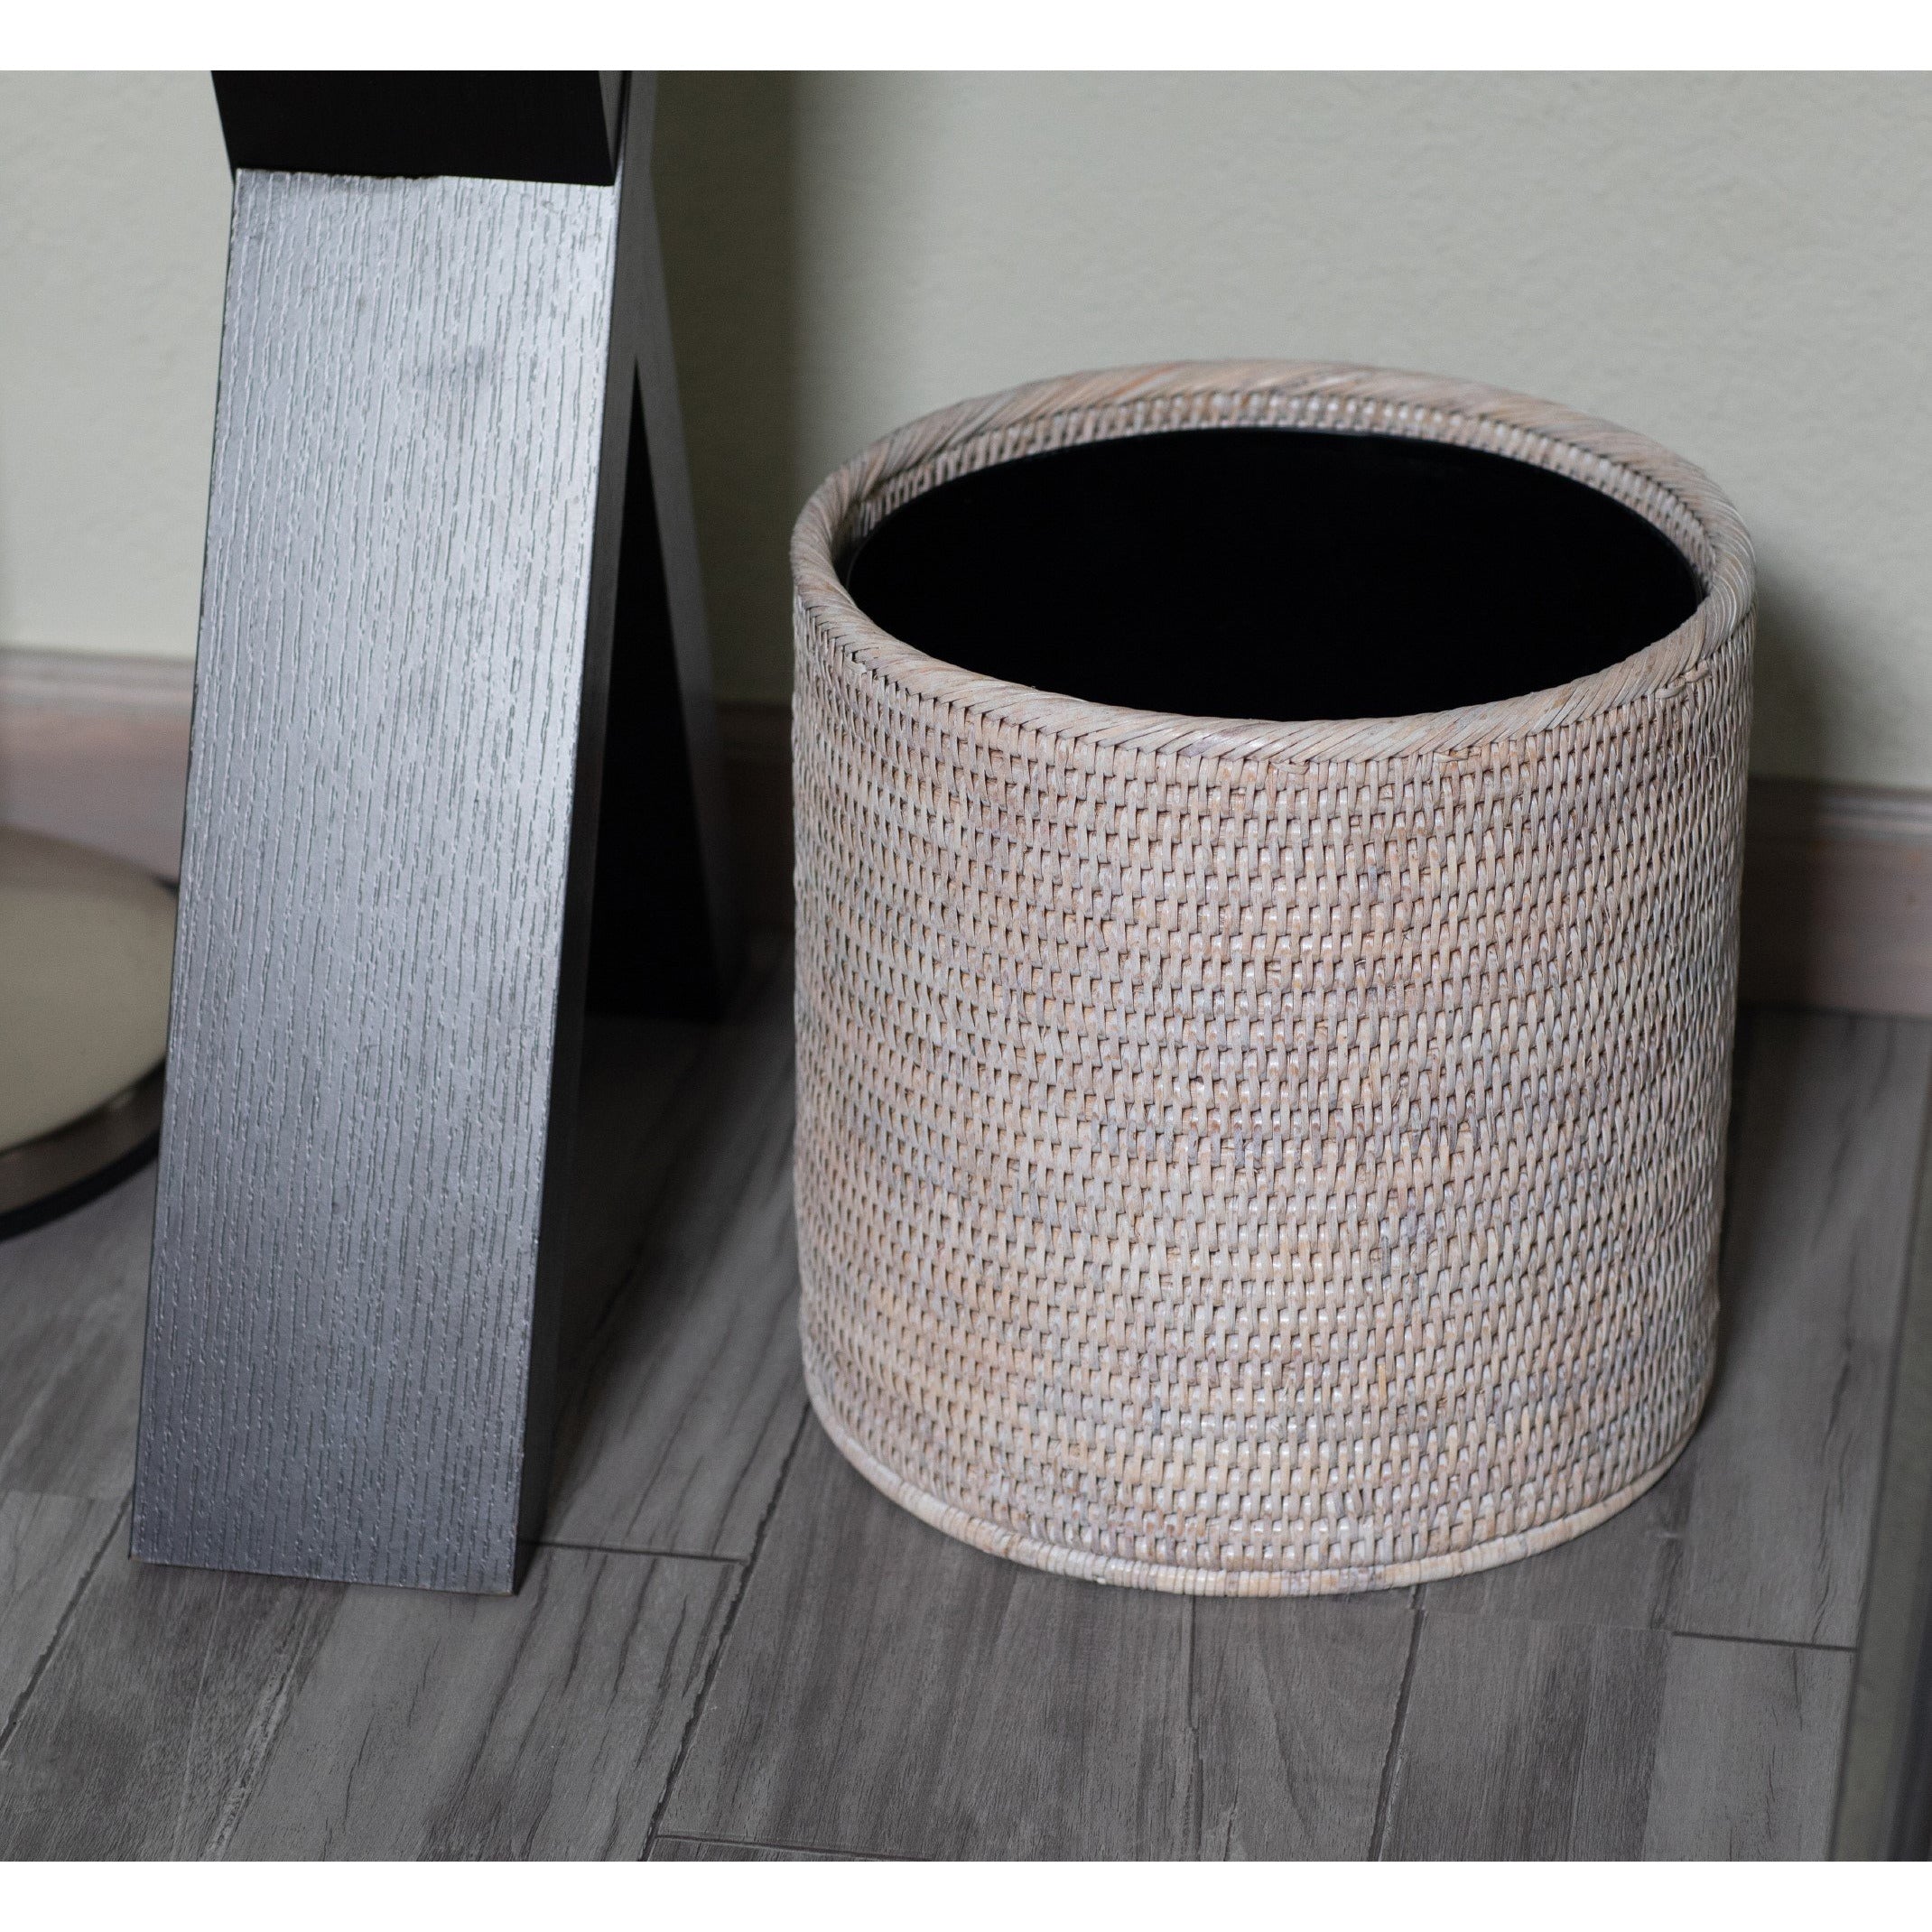 Round Waste Basket with Metal Liner